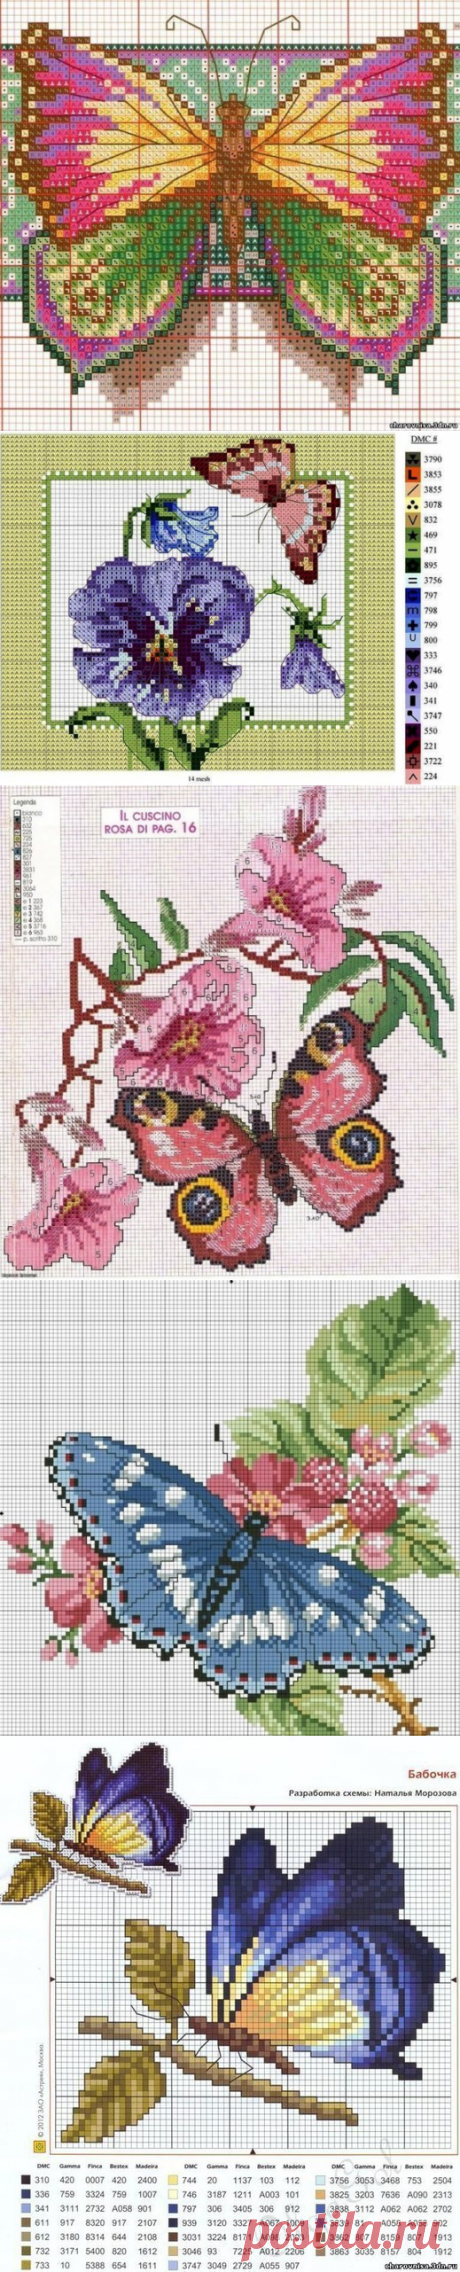 Вышивка бабочек - Схемы вышивки крестом, вышивка крестиком